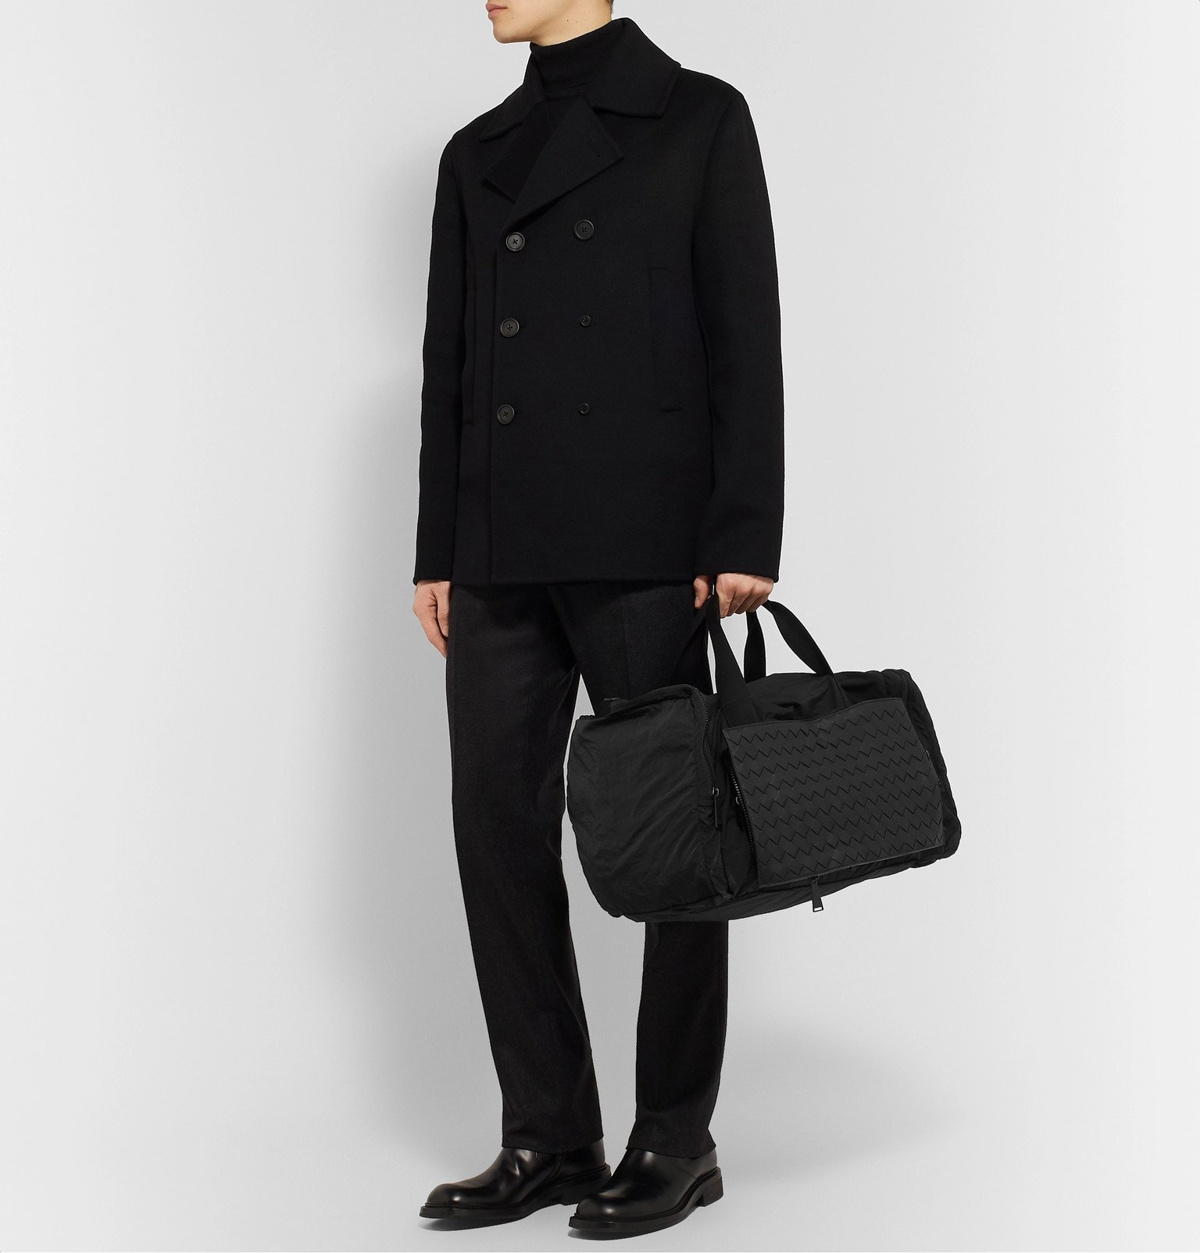 Bottega Veneta® Men's Medium Intrecciato Duffle in Black / Natural. Shop  online now.